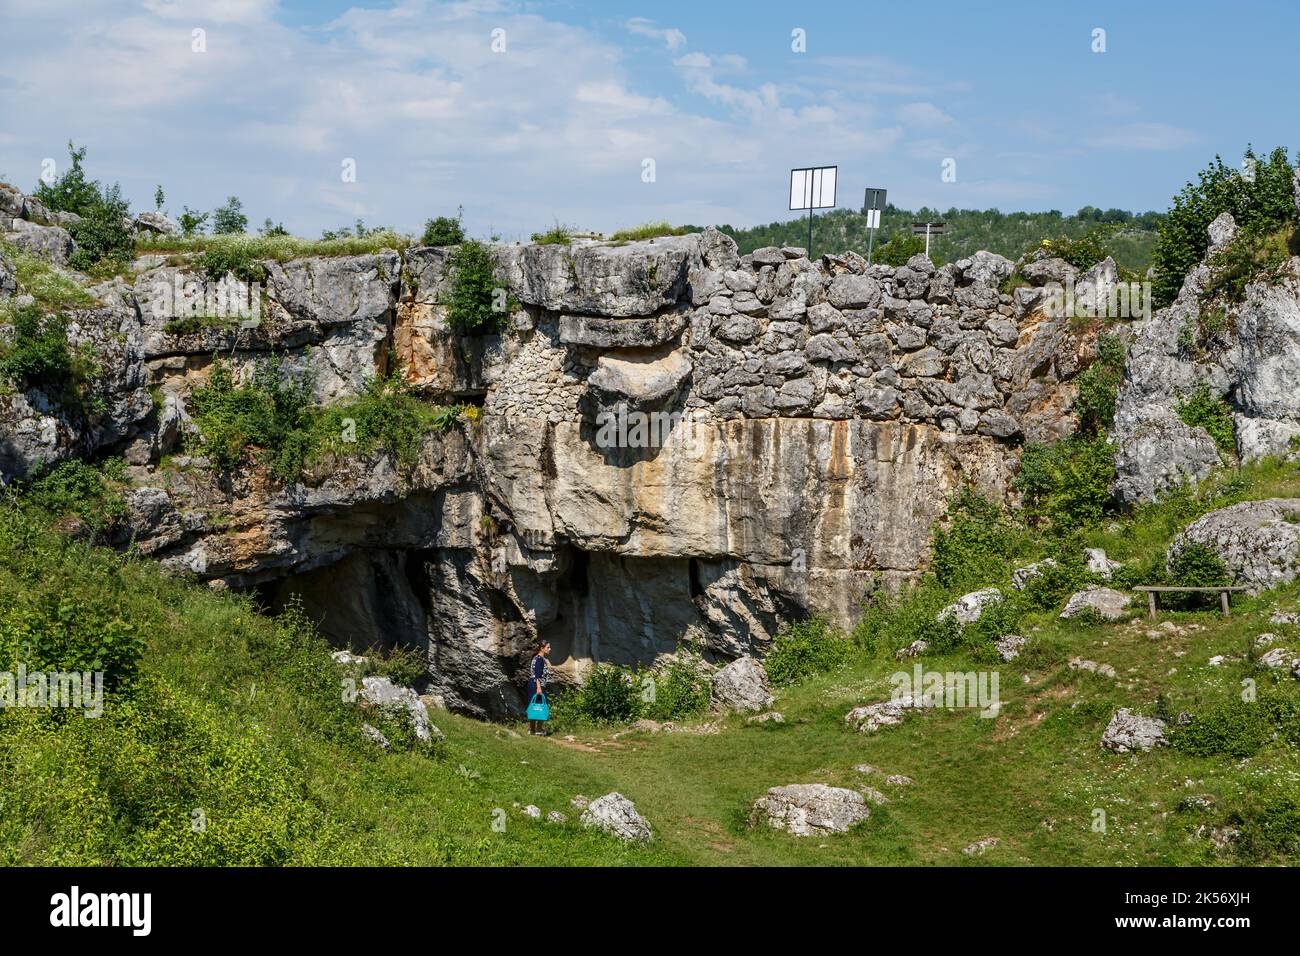 God’s bridge ( Podul lui Dumnezeu ) - natural rock bridge formed by a collapsed cave on june 29, 2020 in Ponoarele, Mehedinti, Romania Stock Photo